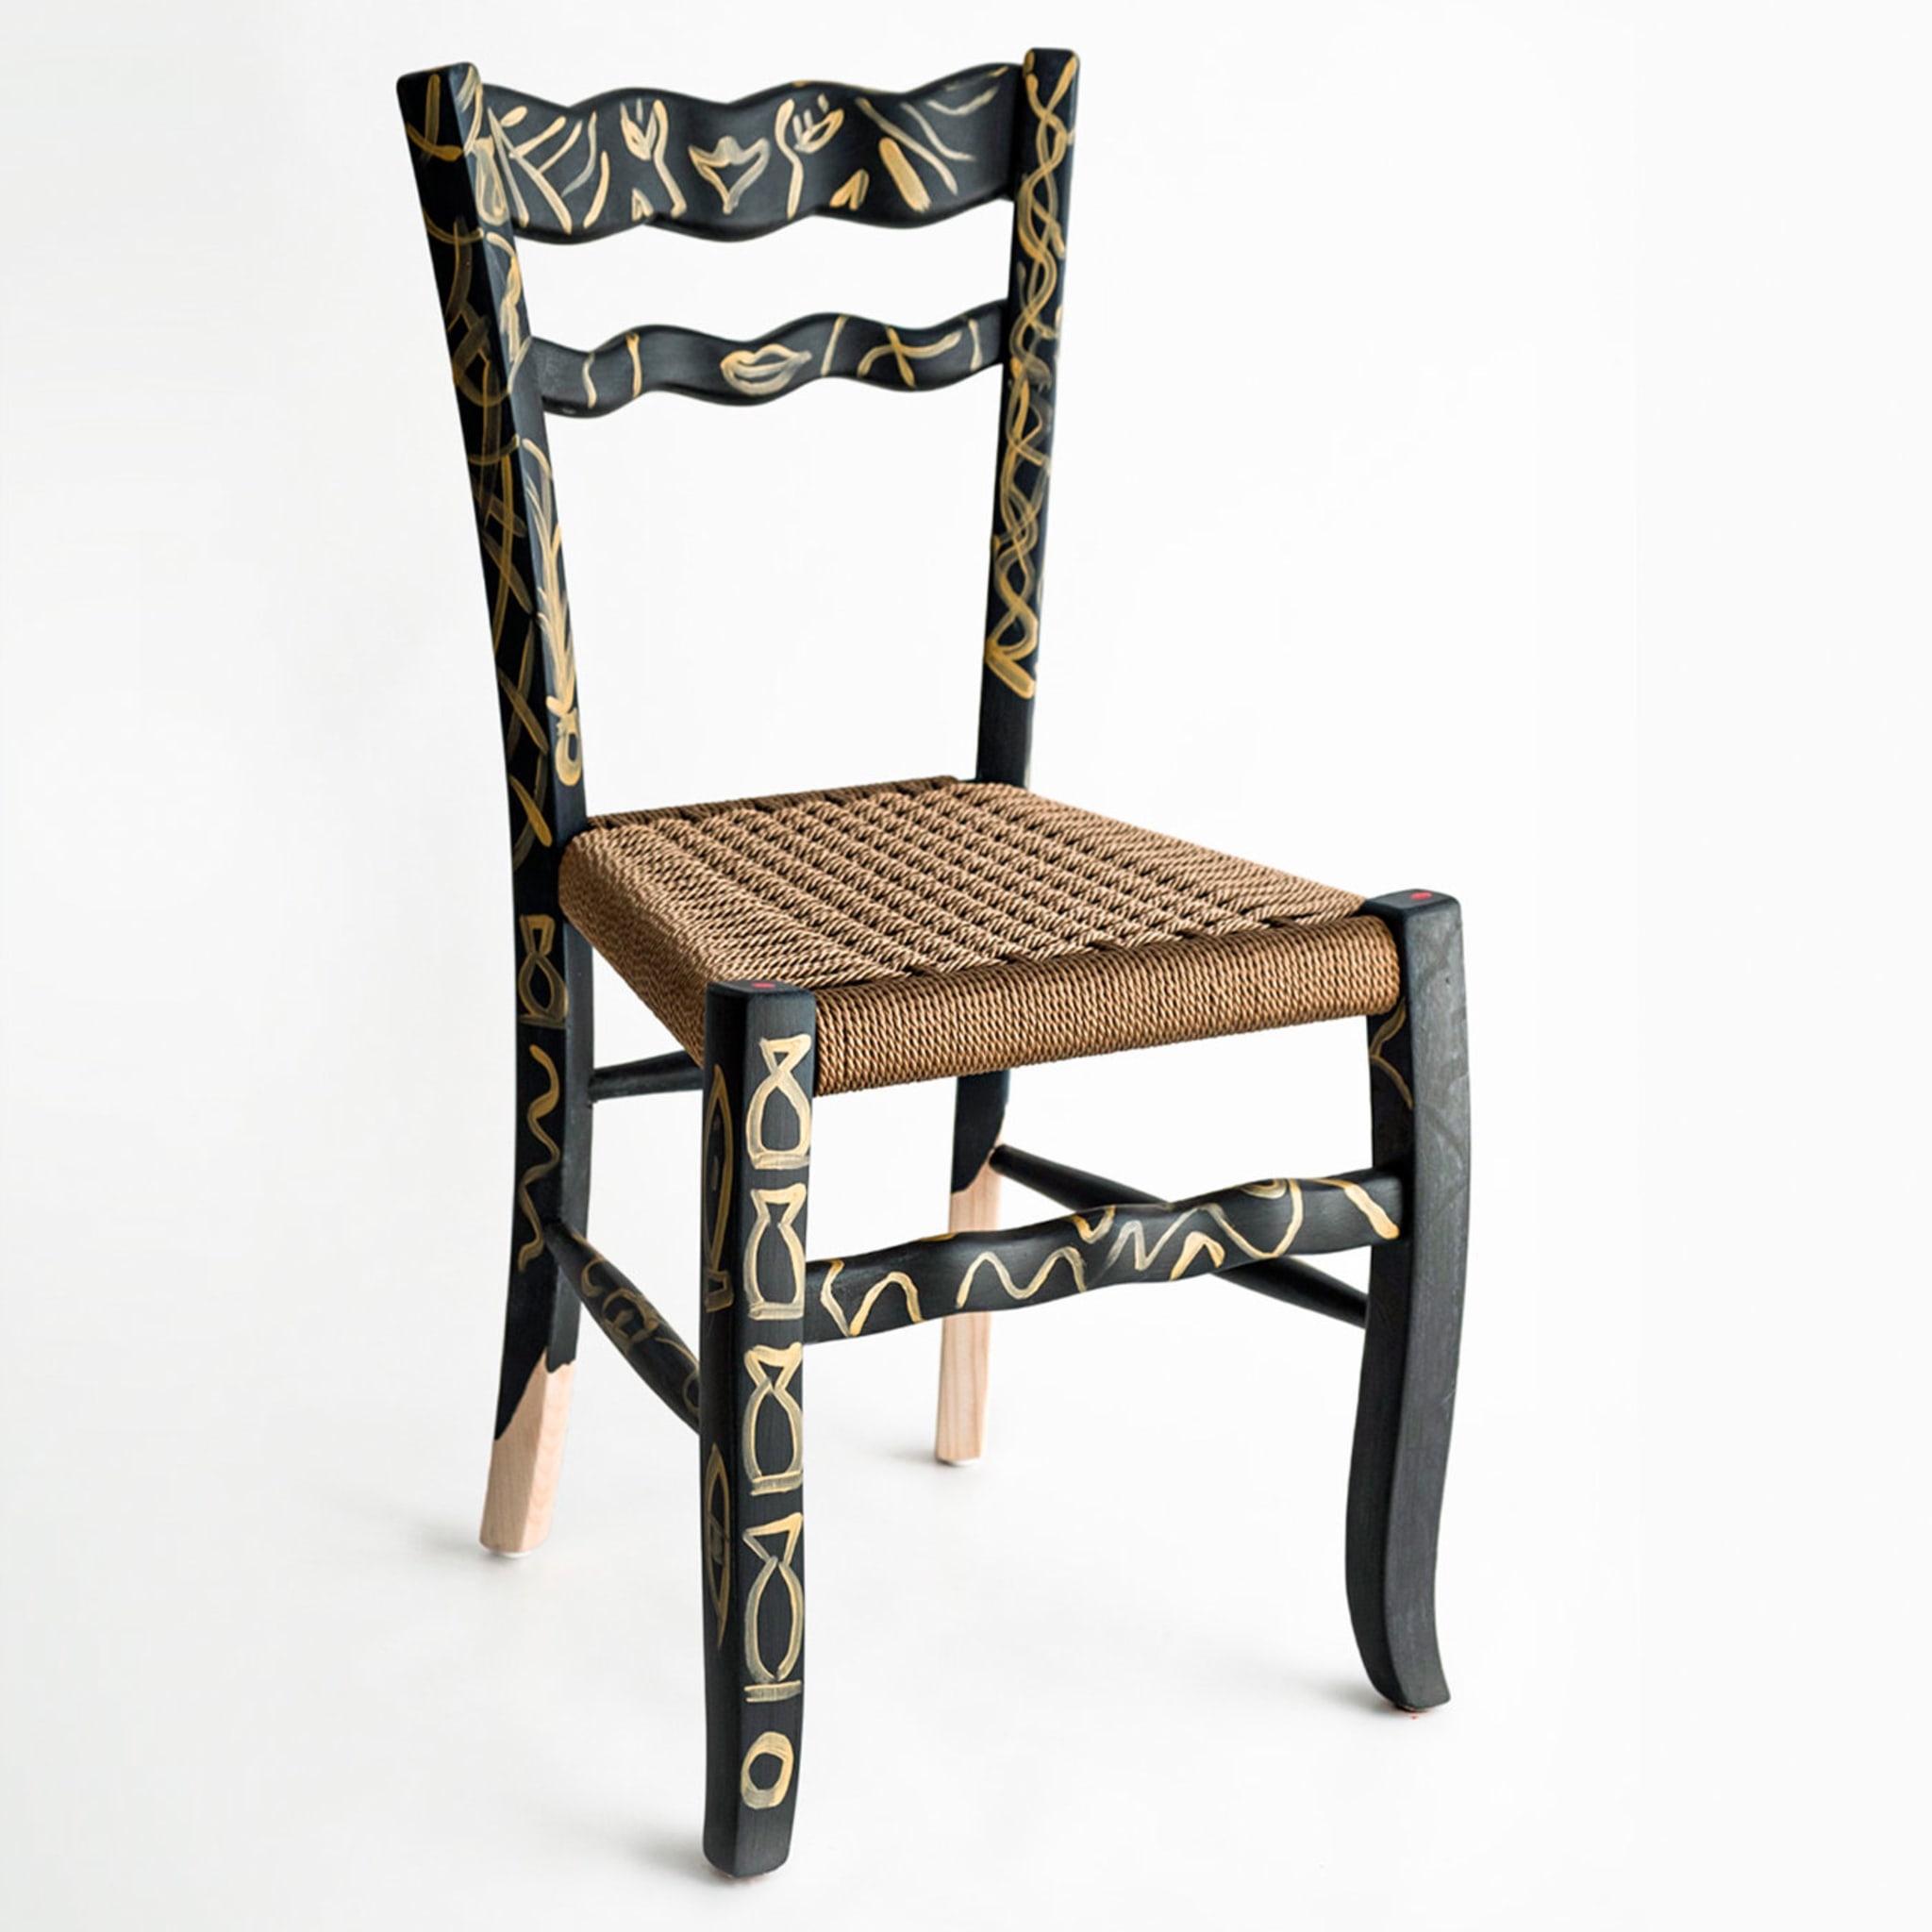 A Signurina Pupara Chair by Antonio Aricò - Alternative view 1